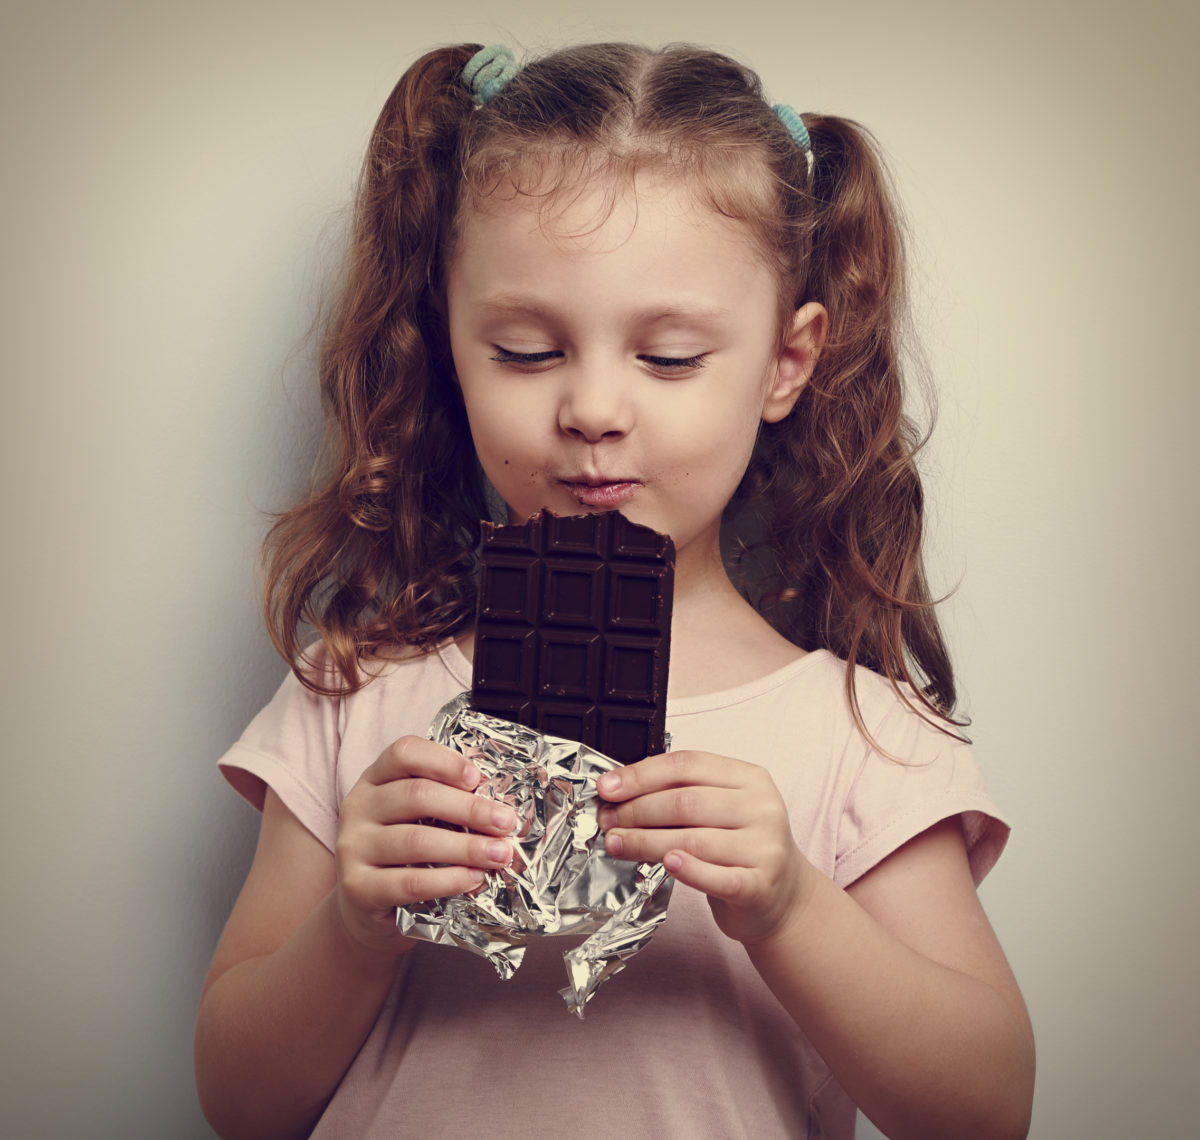 Happy kid girl eating health dark chocolate with pleasure and closed eyes.Vintage portrait